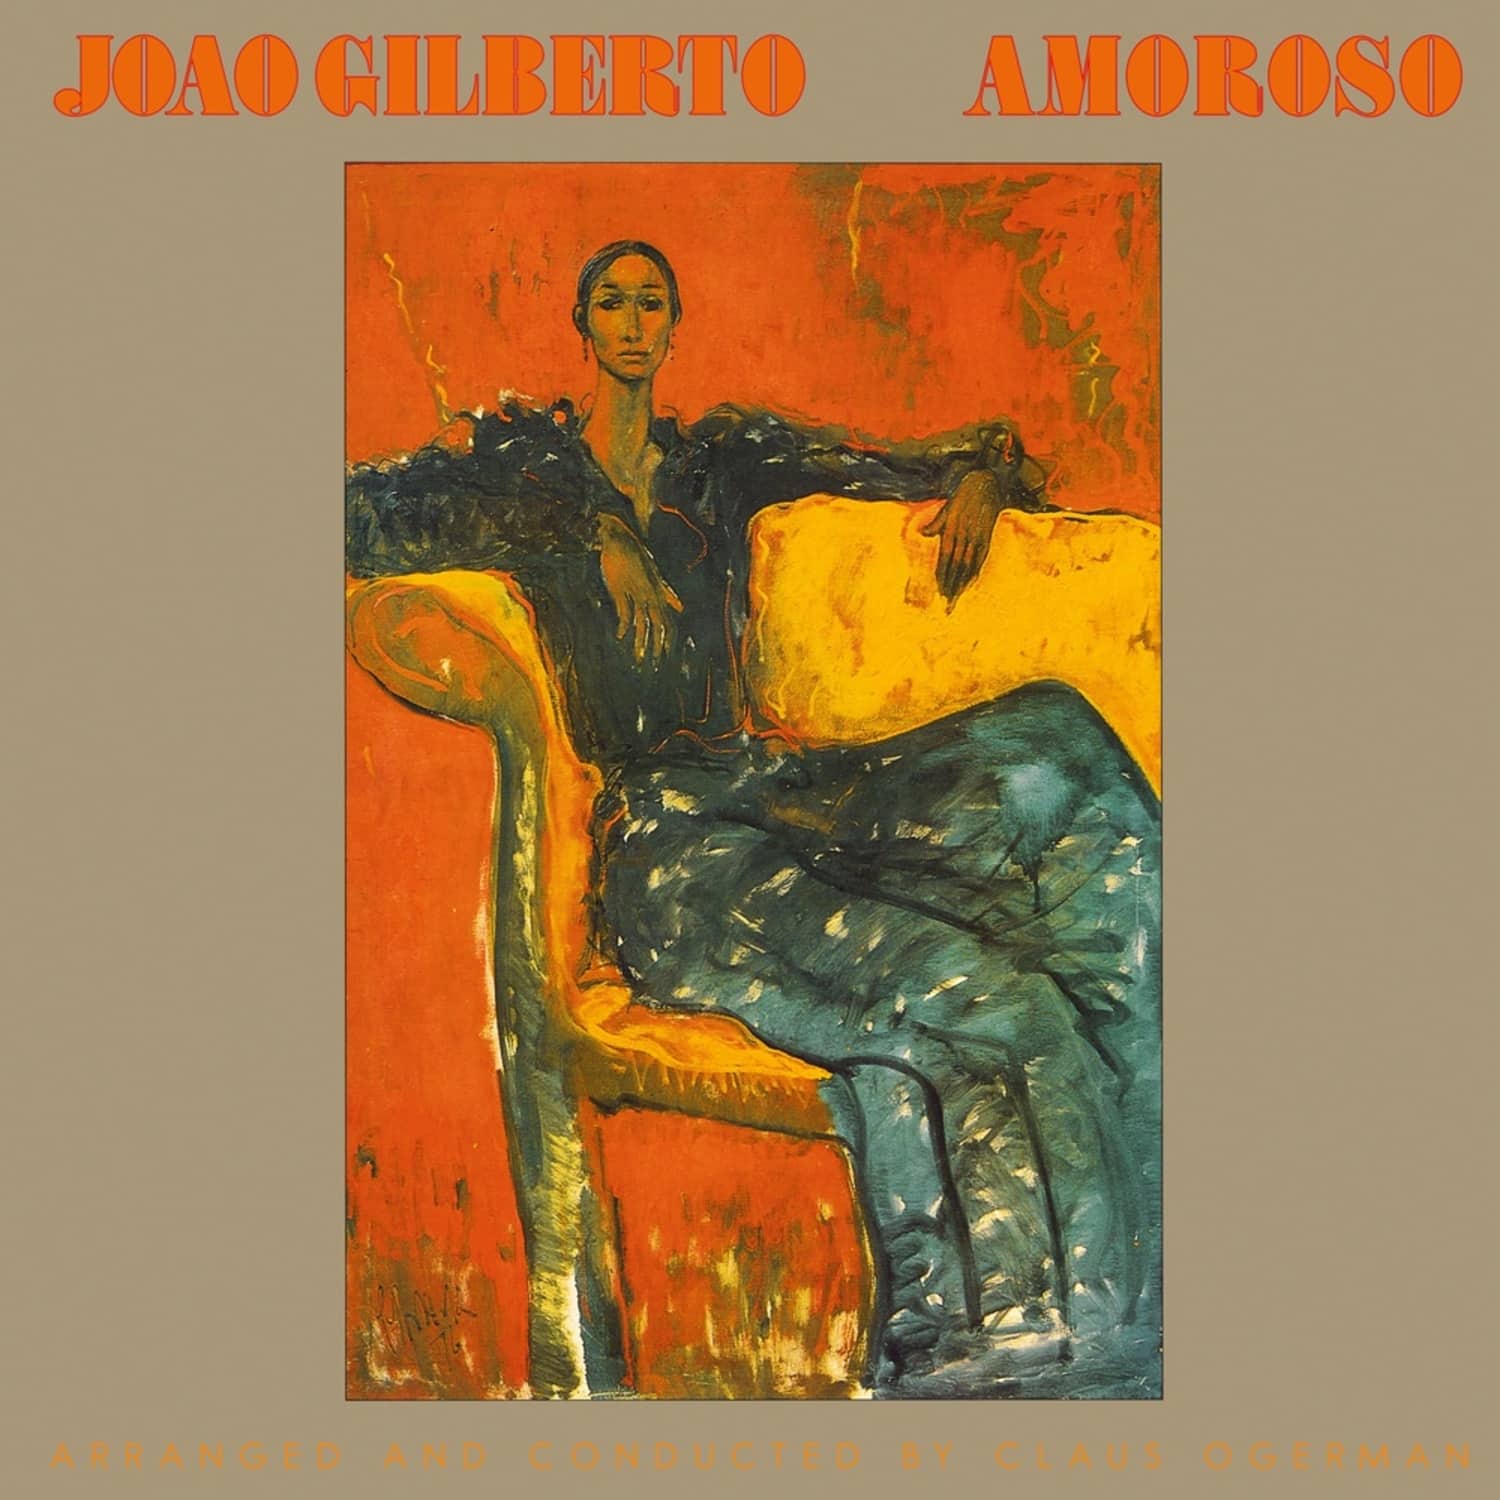 Joao Gilberto - AMOROSO 